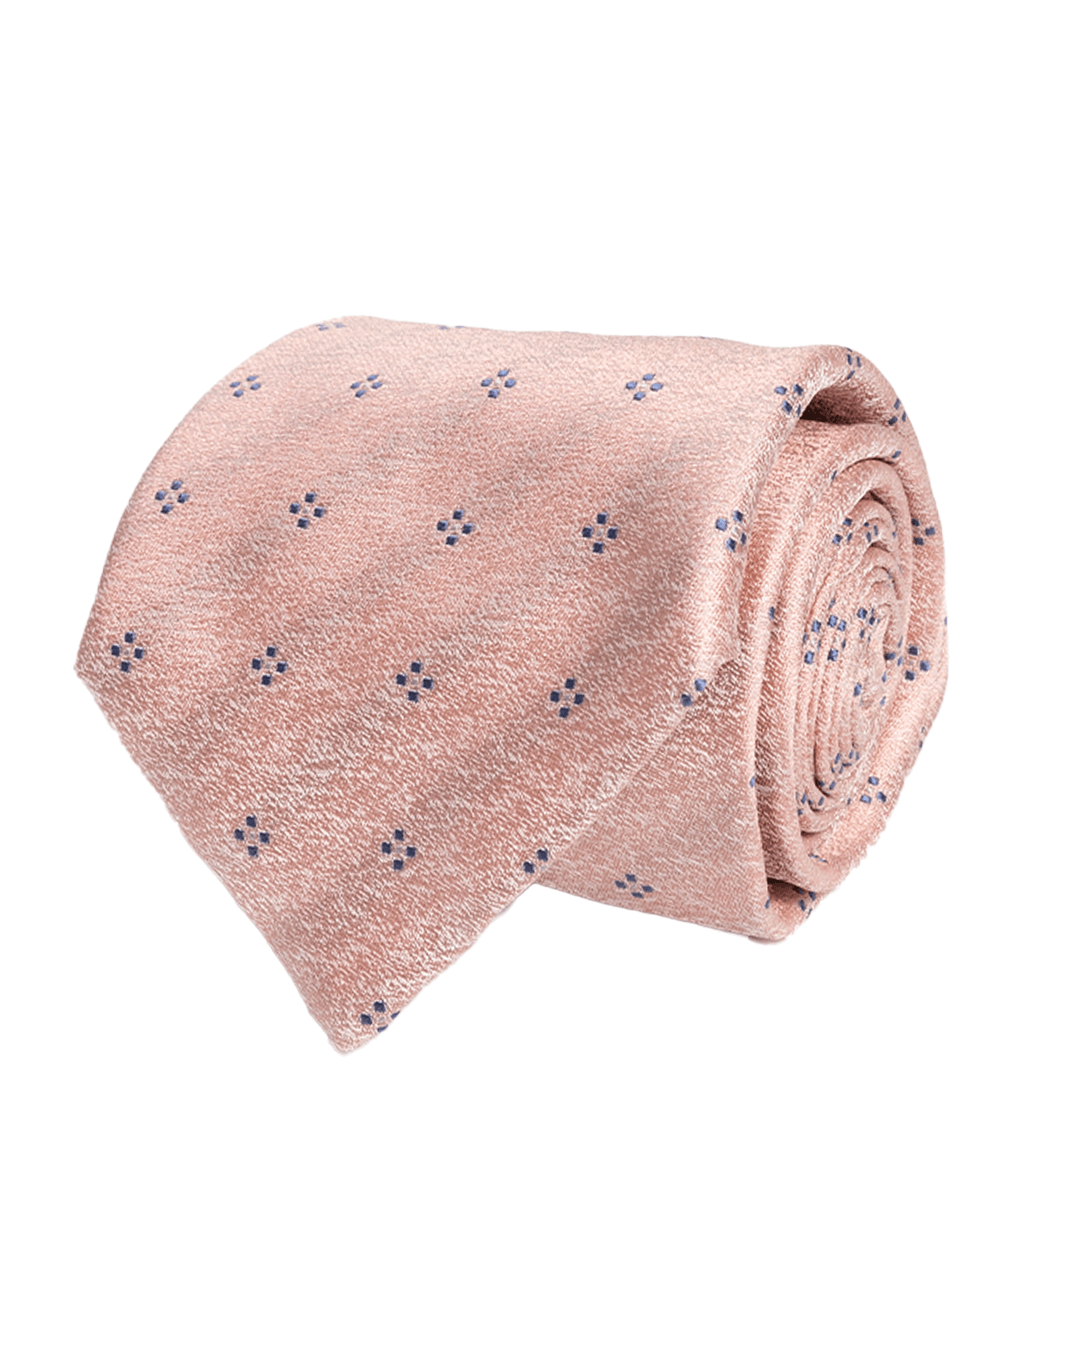 Gagliardi Ties One Size Gagliardi Pink Four Dots Design Italian Silk Tie